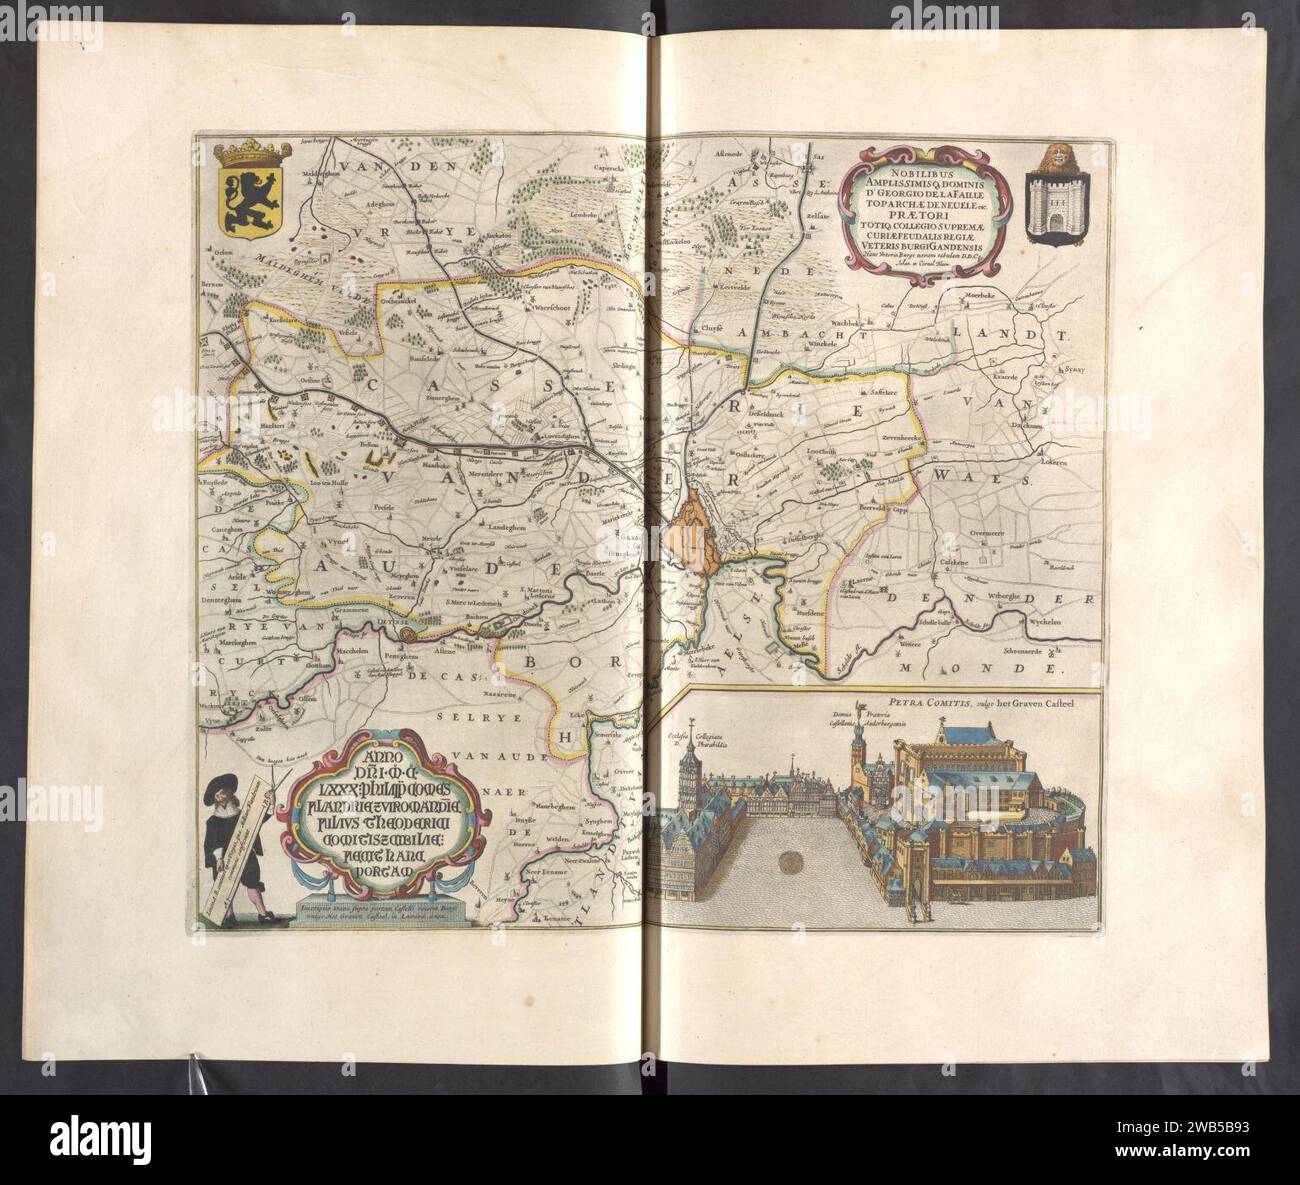 ((Map of the castellania of Gent)) - Atlas Maior, vol 4, map 11 - Joan Blaeu, 1667 Stock Photo